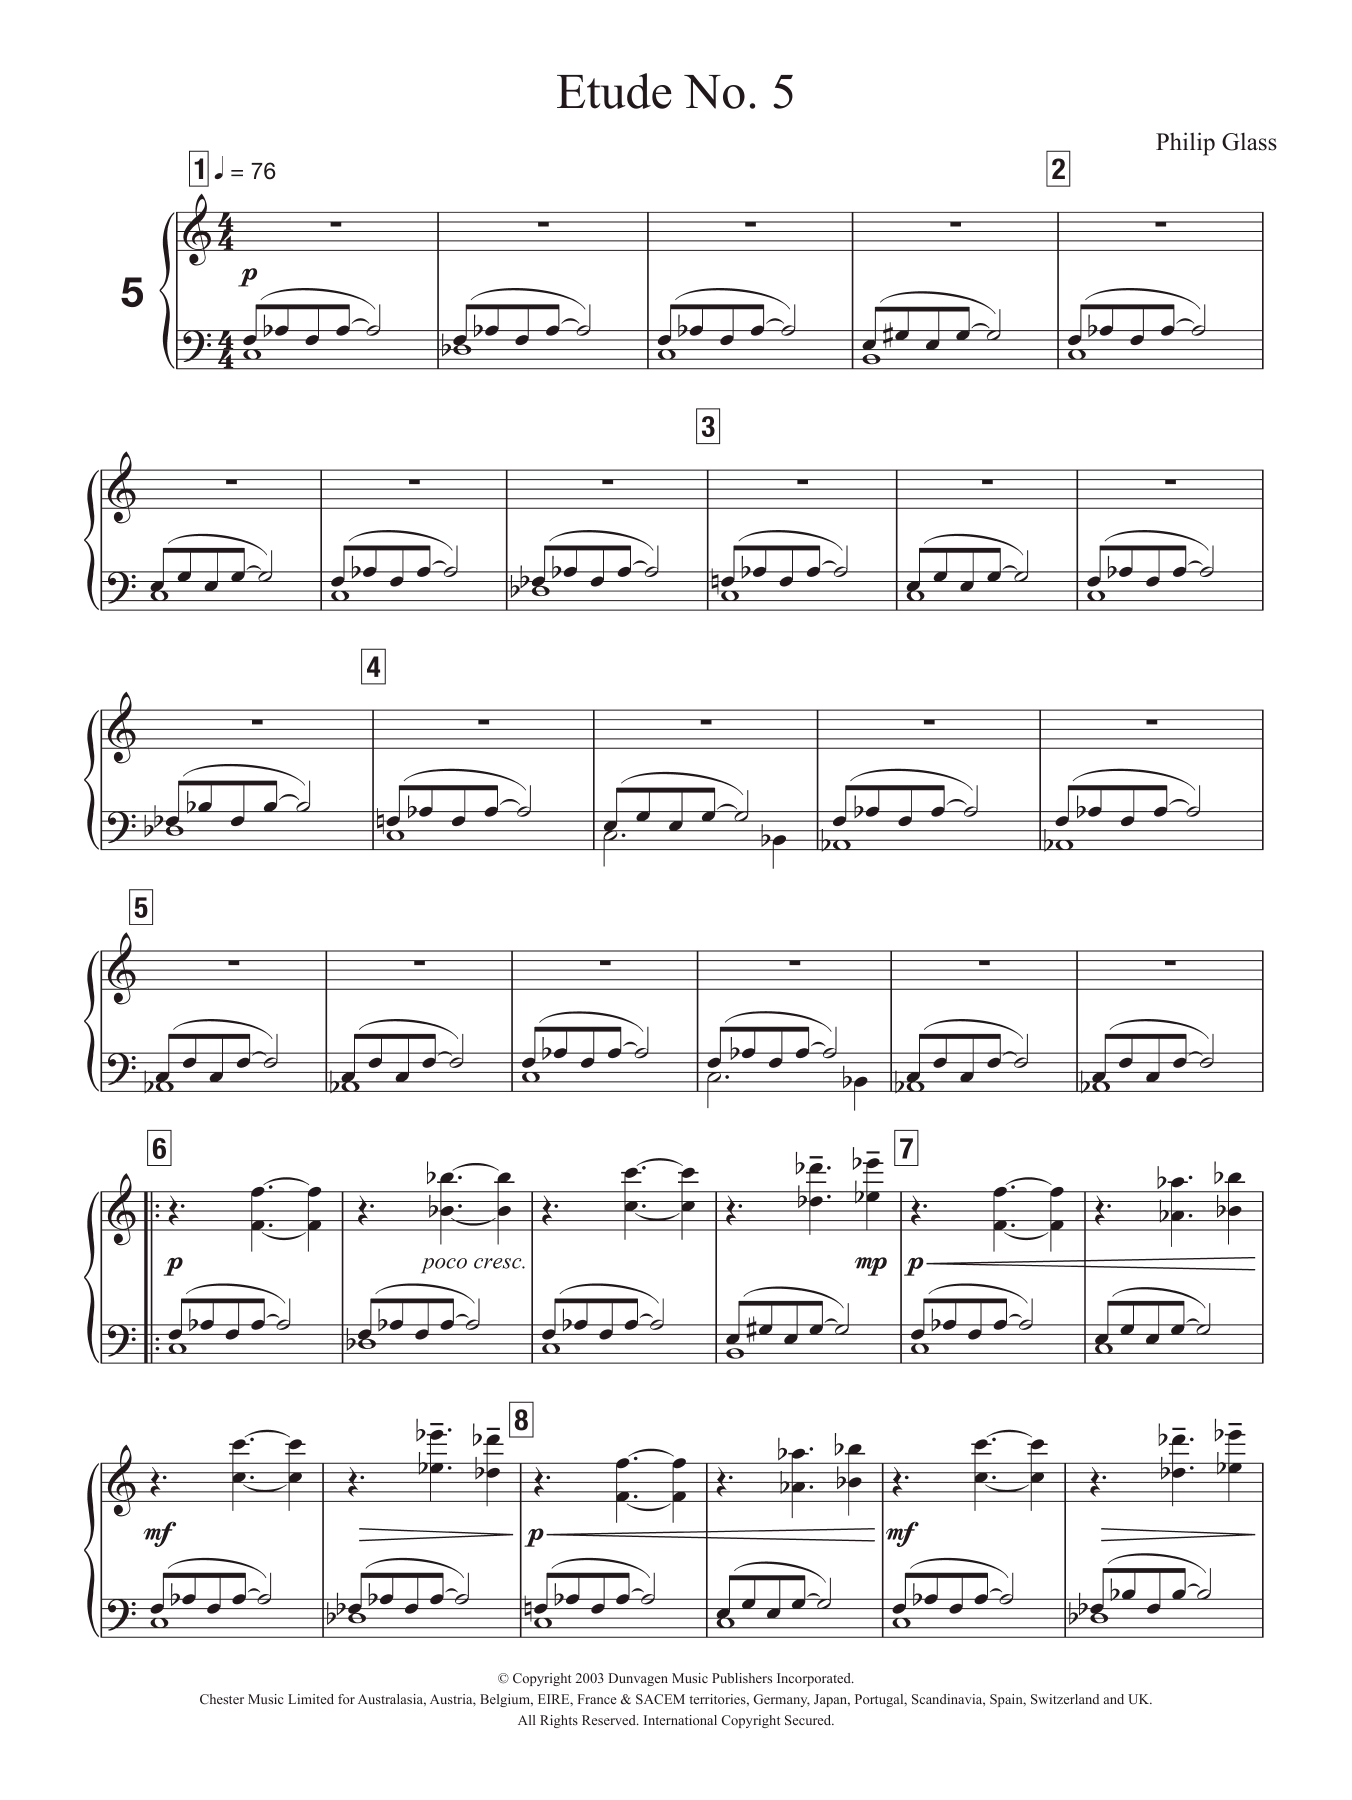 Download Philip Glass Etude No. 5 Sheet Music